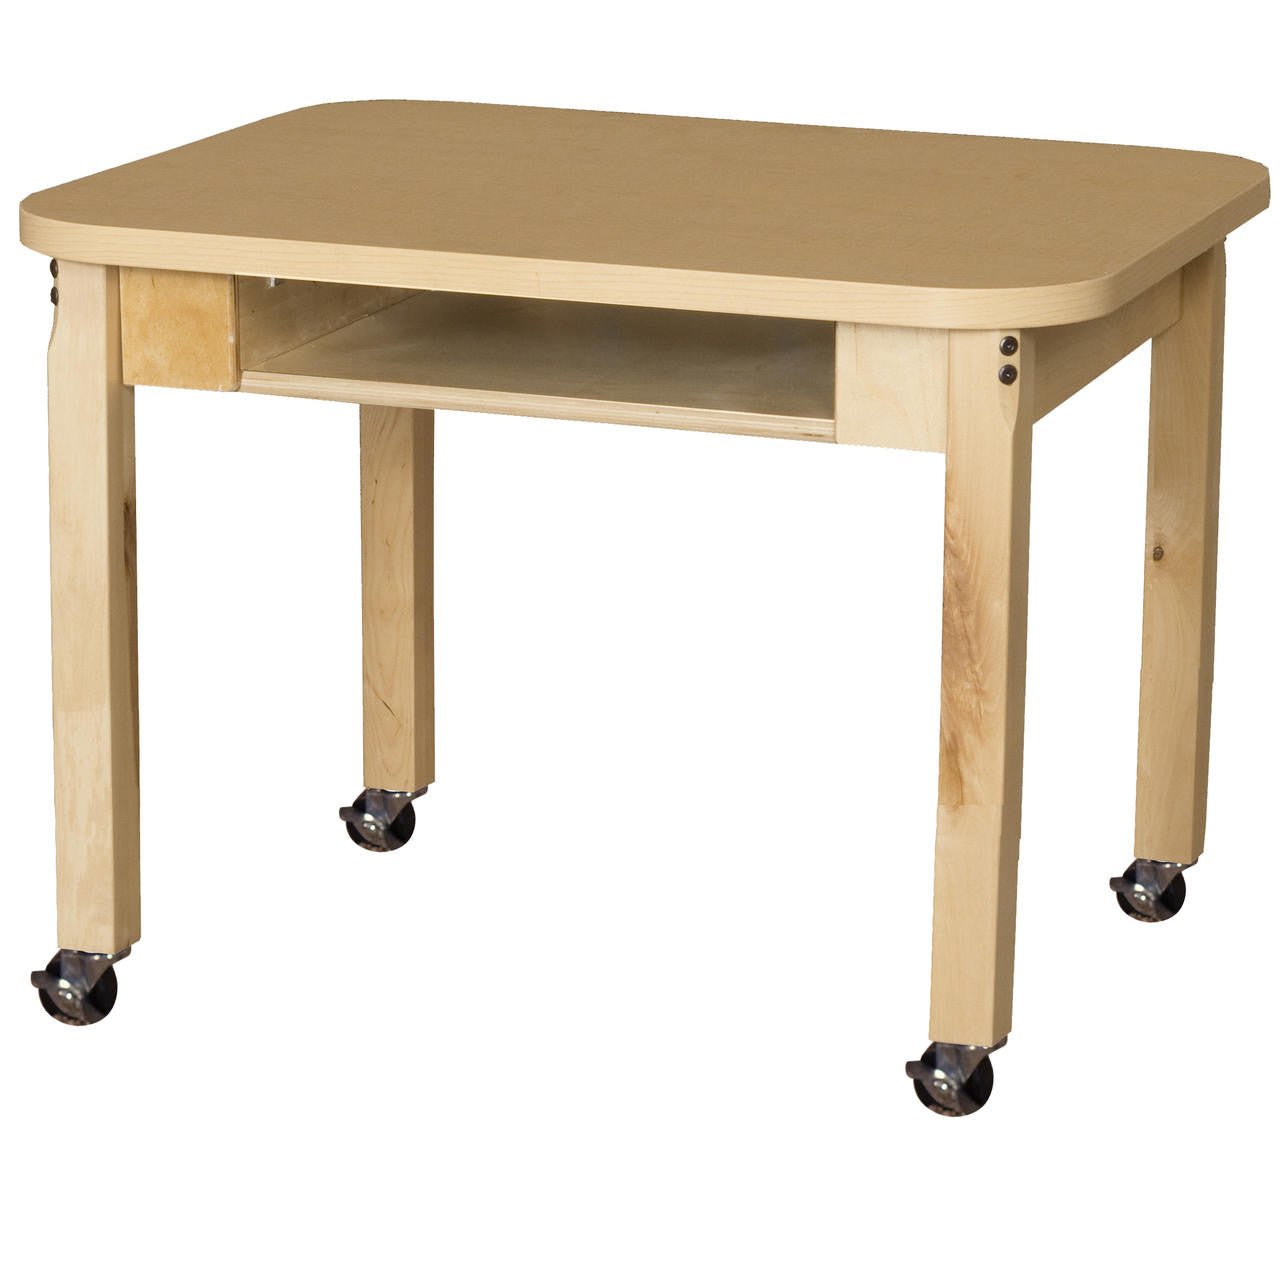 Mobile Classroom High Pressure Laminate Desk with Hardwood Legs- 18